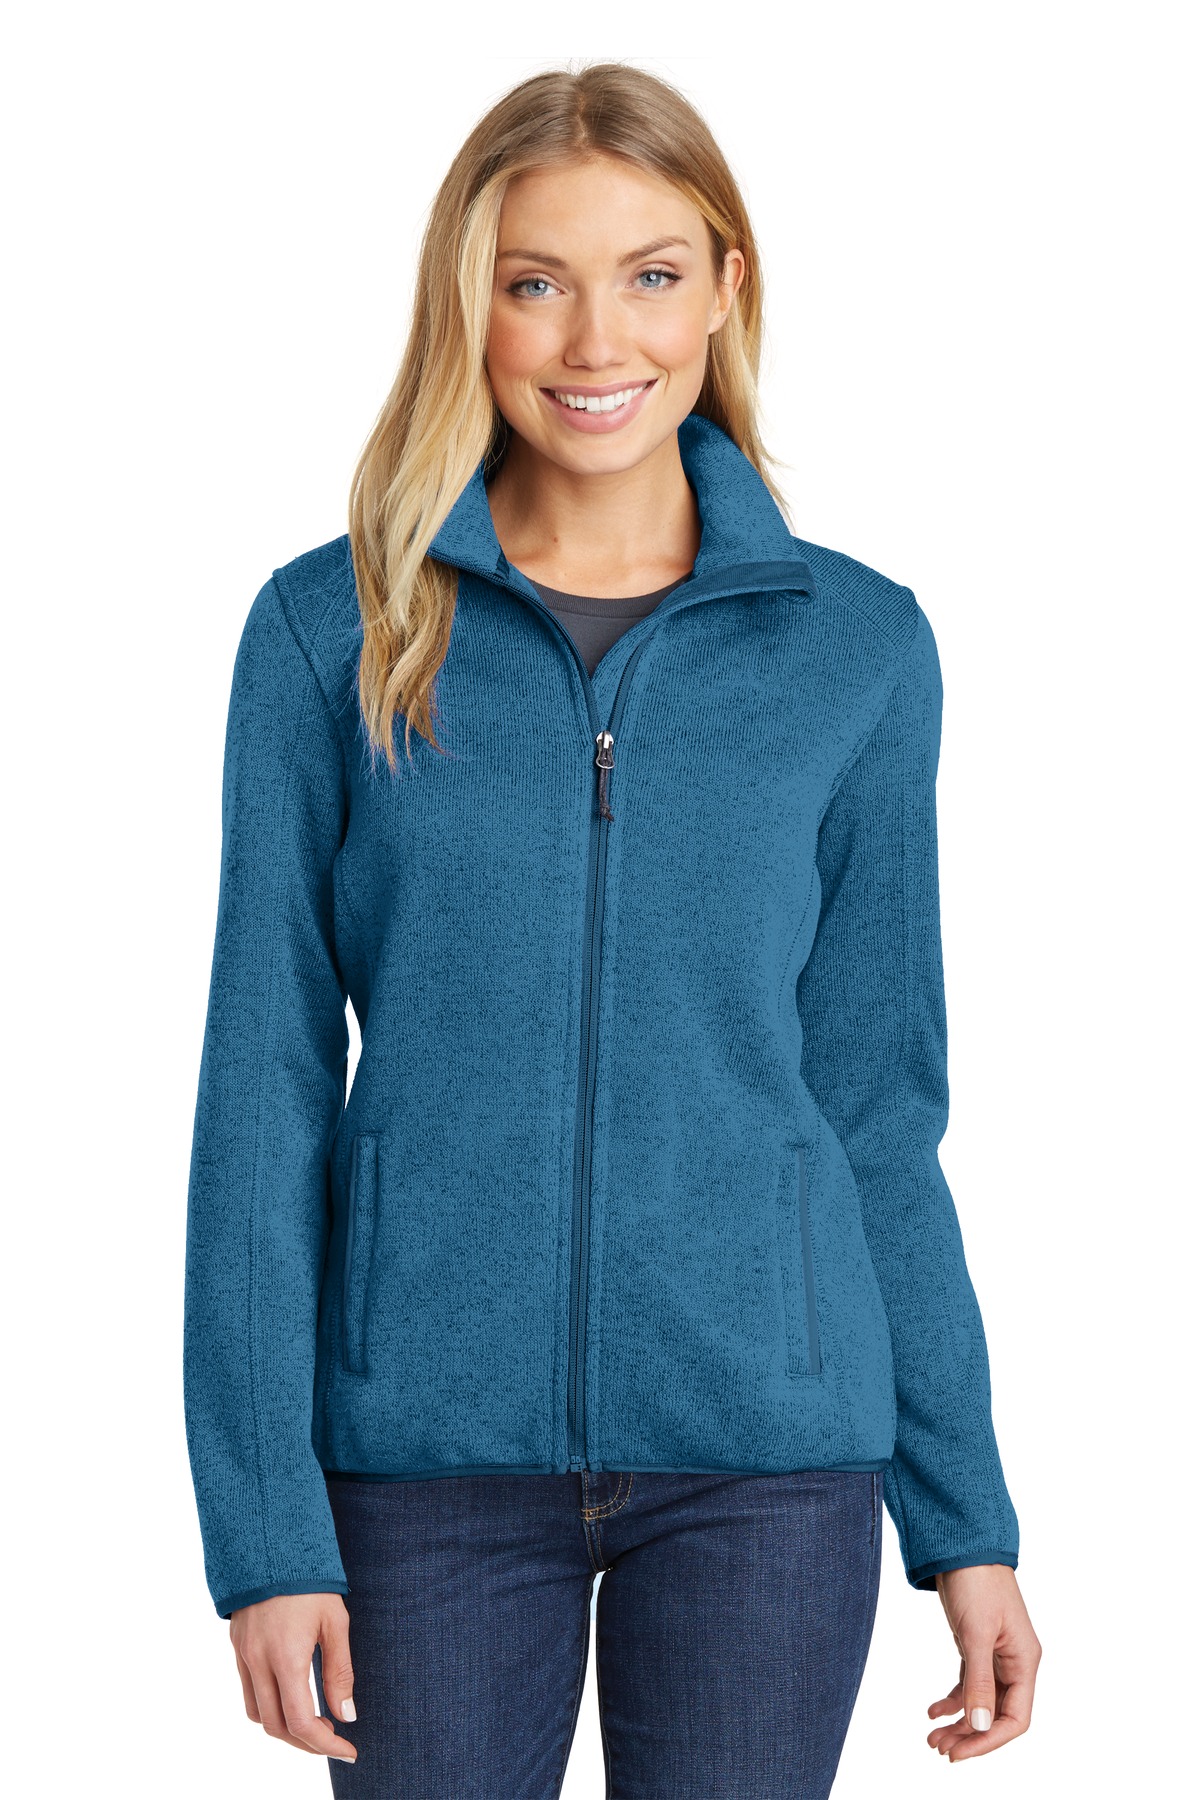 Port Authority Ladies Sweater Fleece Jacket Womens Full Zip Up L232 | eBay